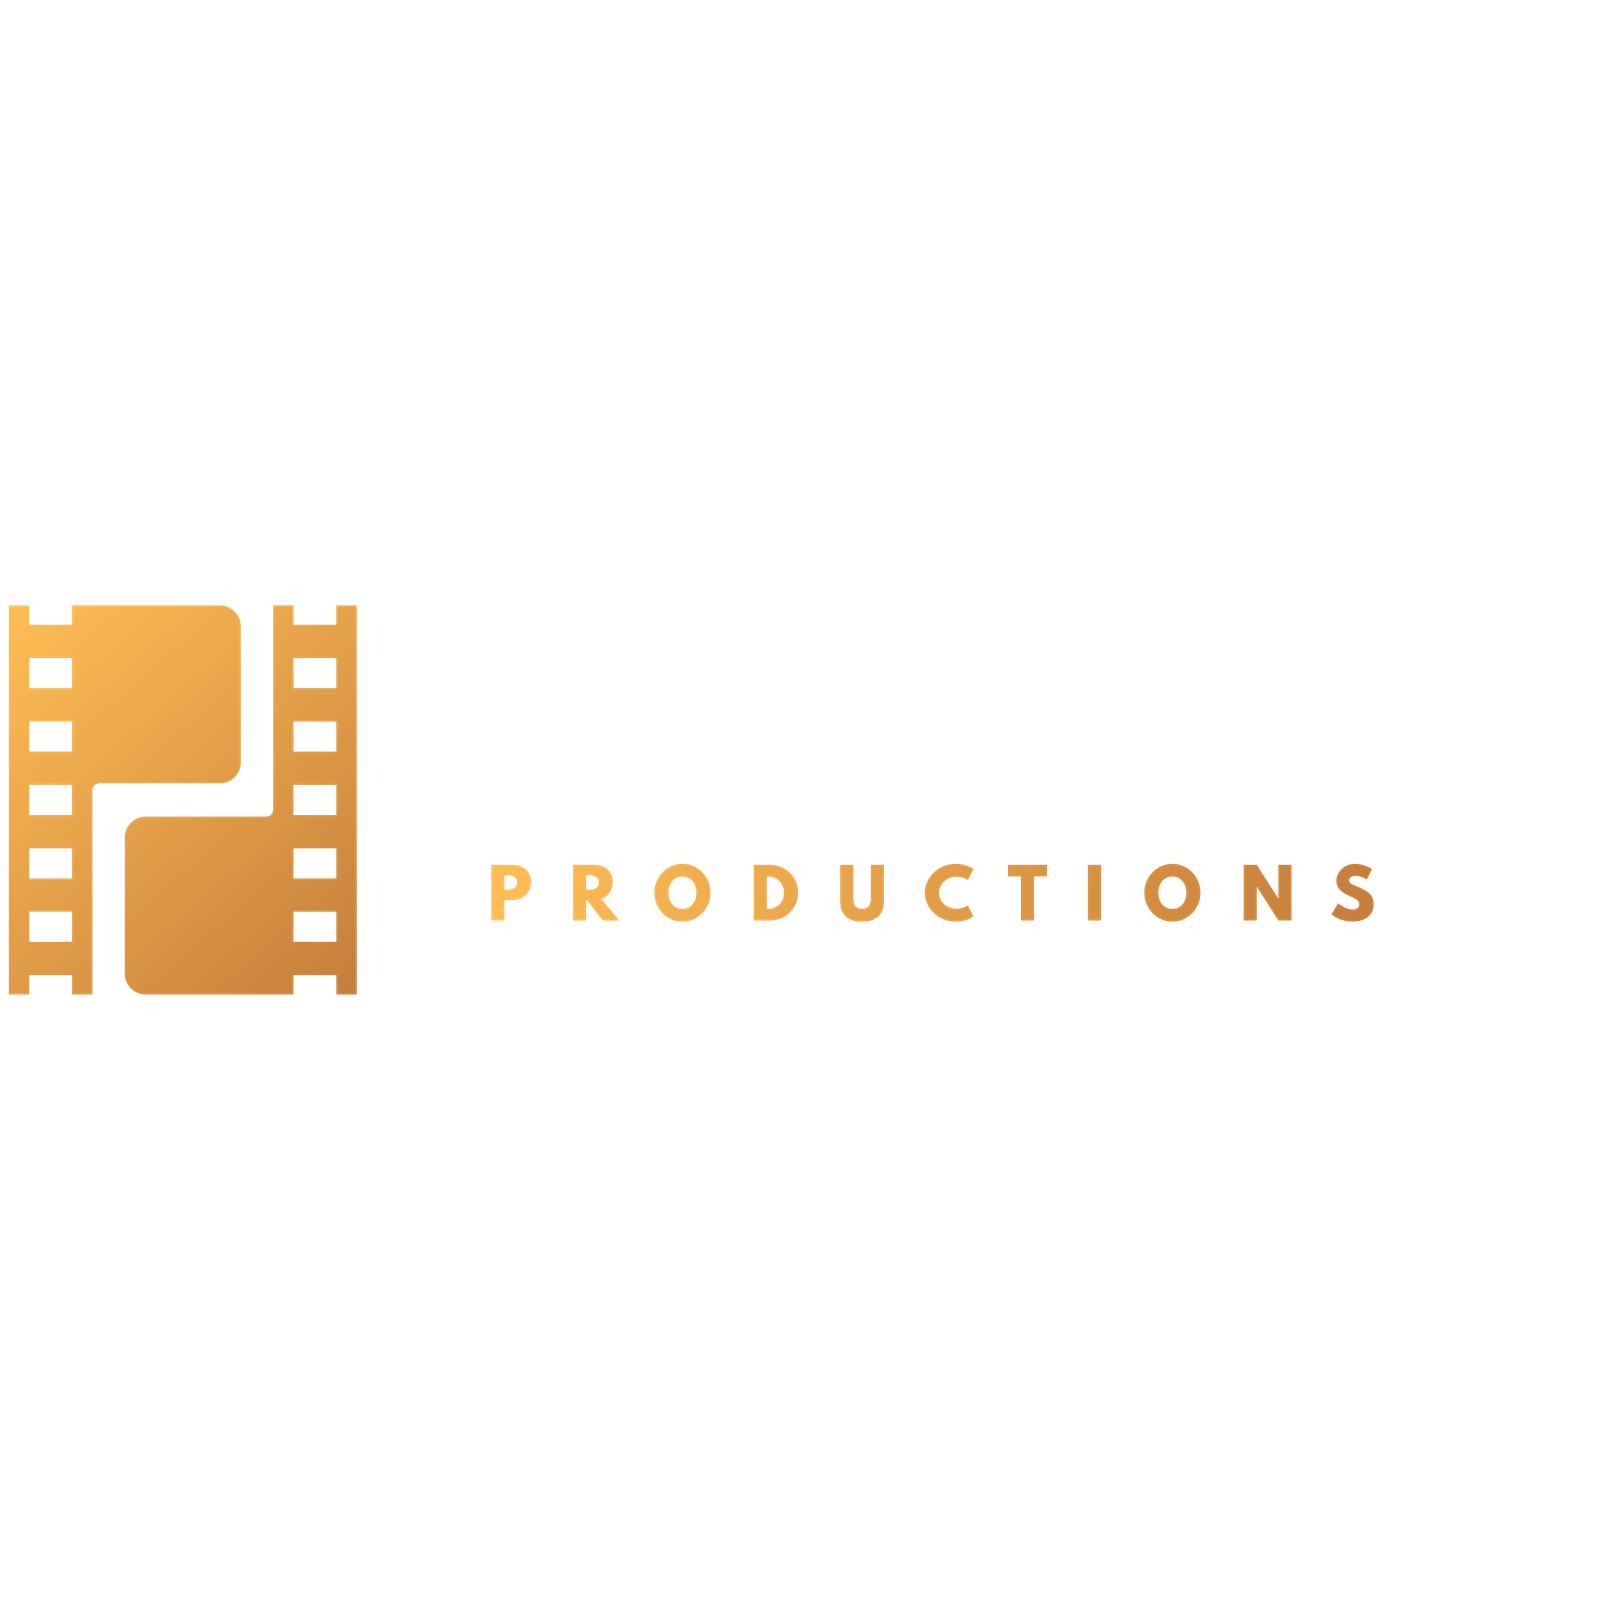 Pinheiro Productions